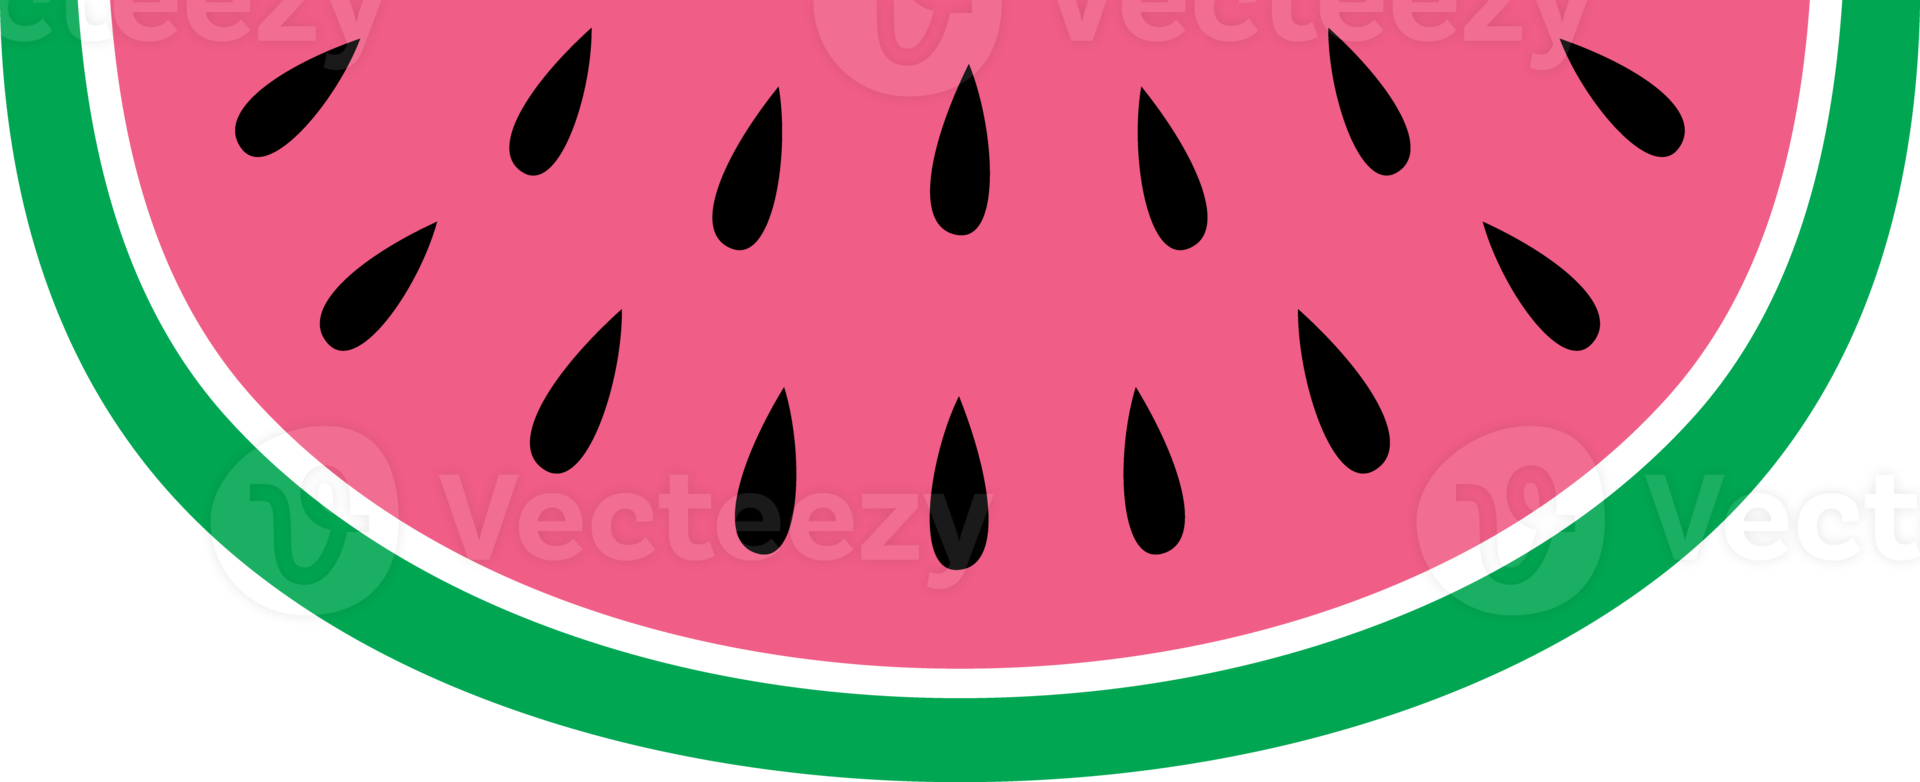 Watermelon Slice Illustration png